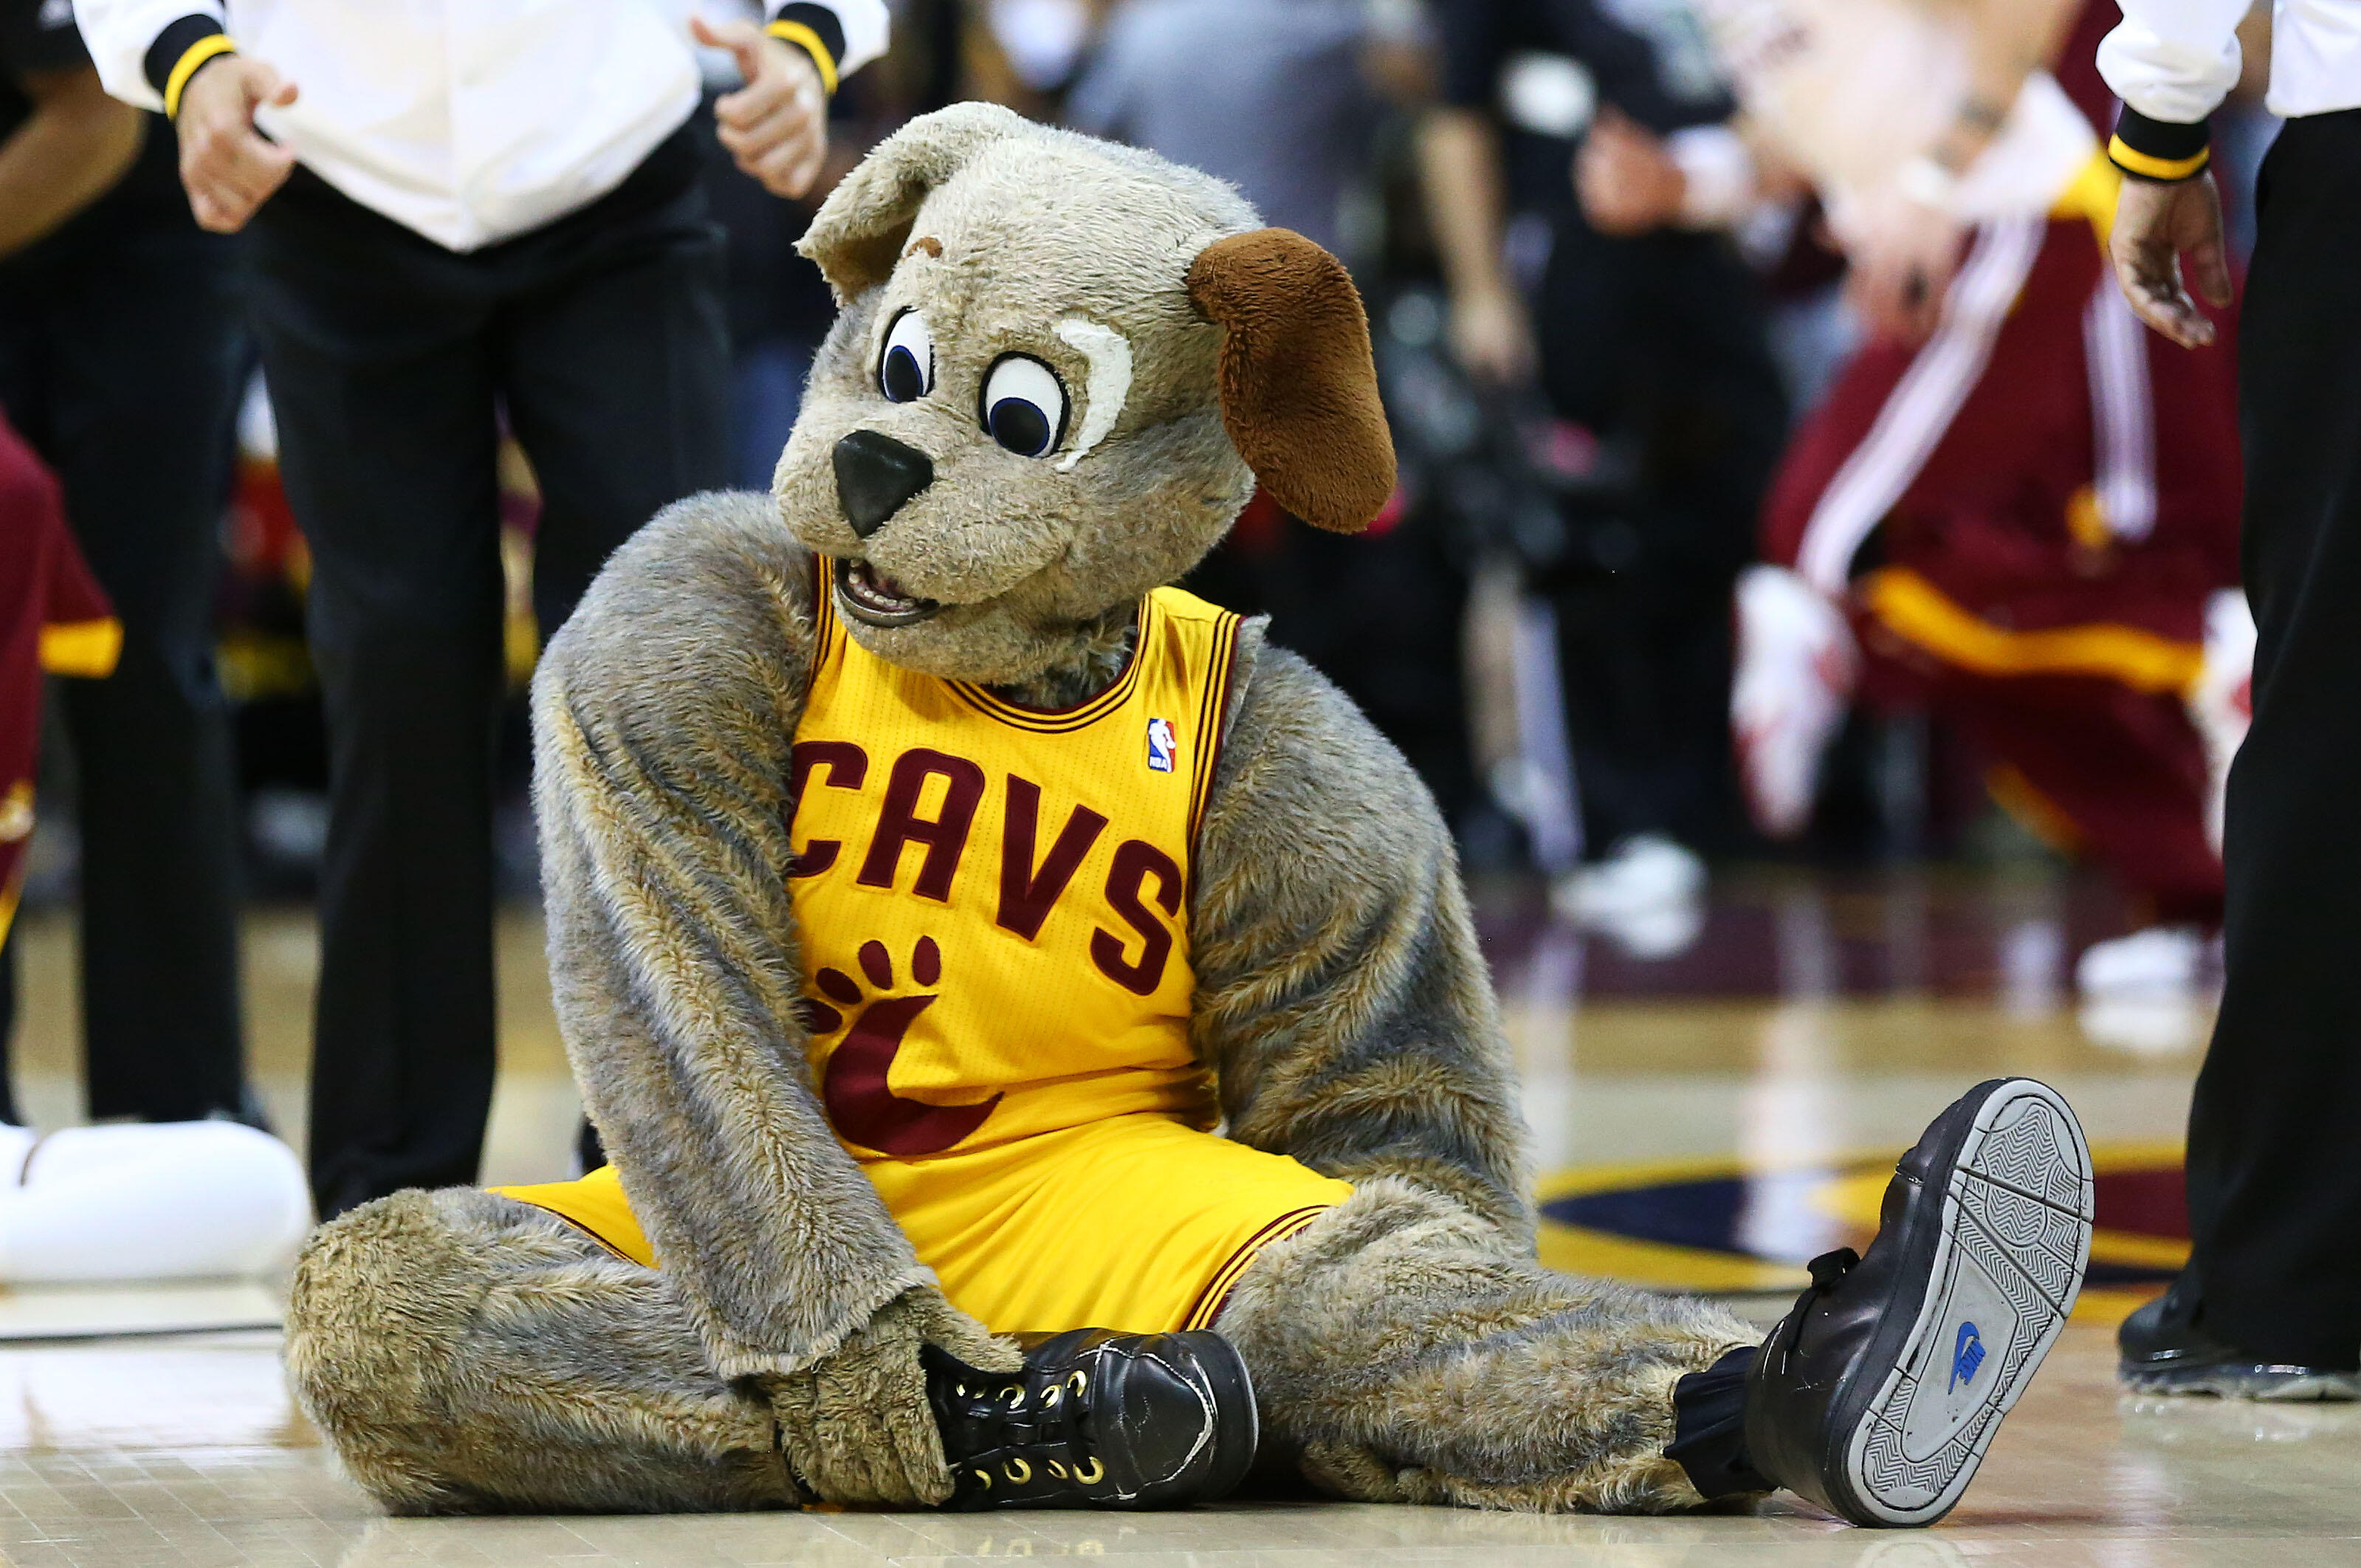 Moondog and Sir CC- Cleveland Cavaliers' mascots